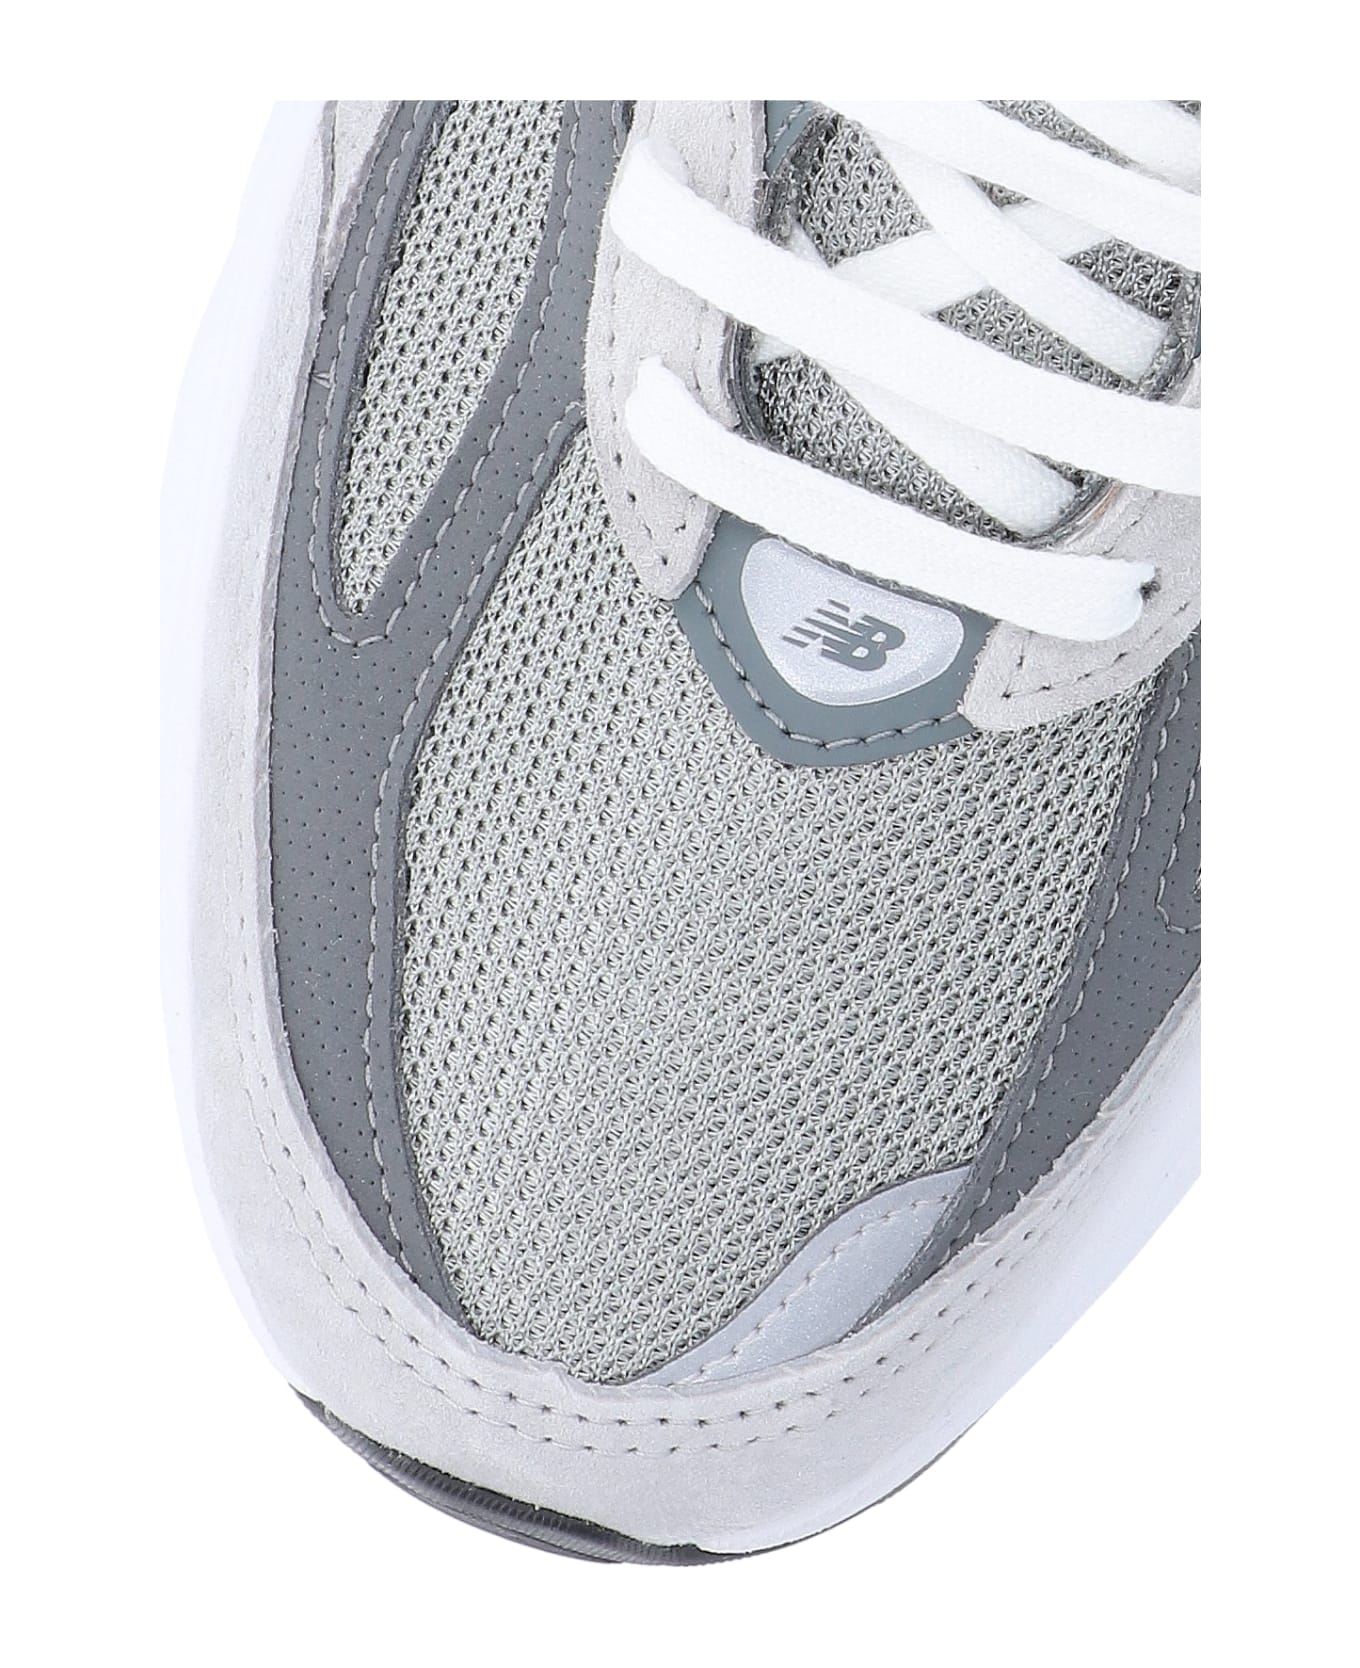 New Balance X Teddy Santis '990 V6' Sneakers - Gray